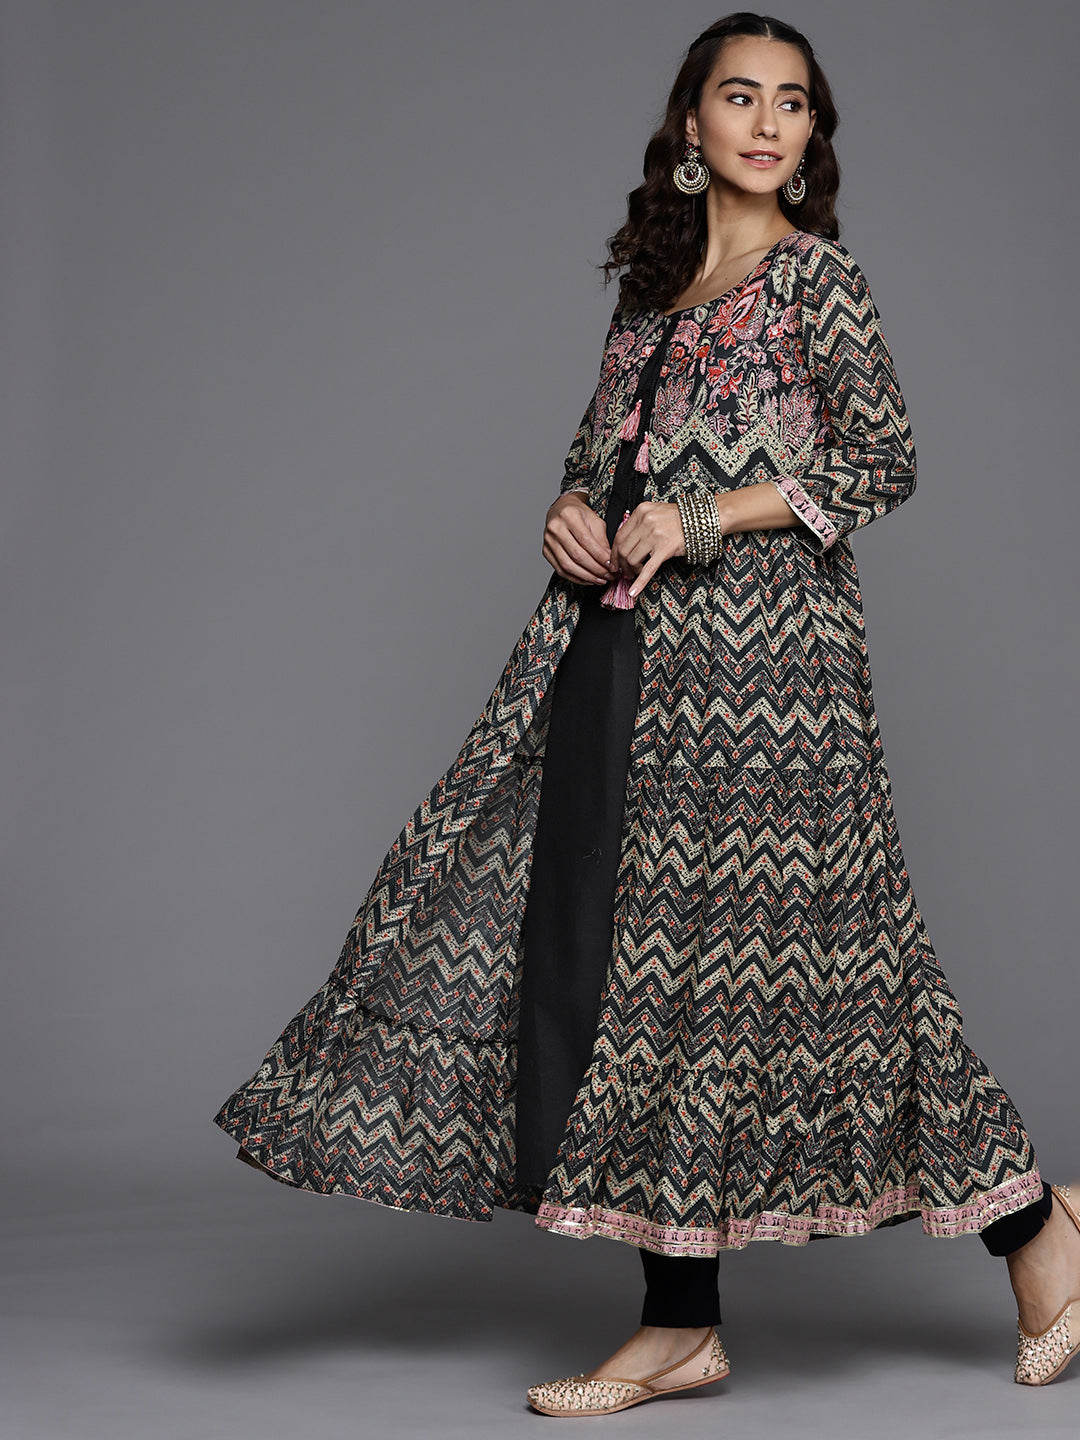 Buy Online Kurta & Kurtis, Salwar Kameez, and Anarkali - BIBA Official  Online Store | Indian gowns dresses, Indian gowns, Indian attire